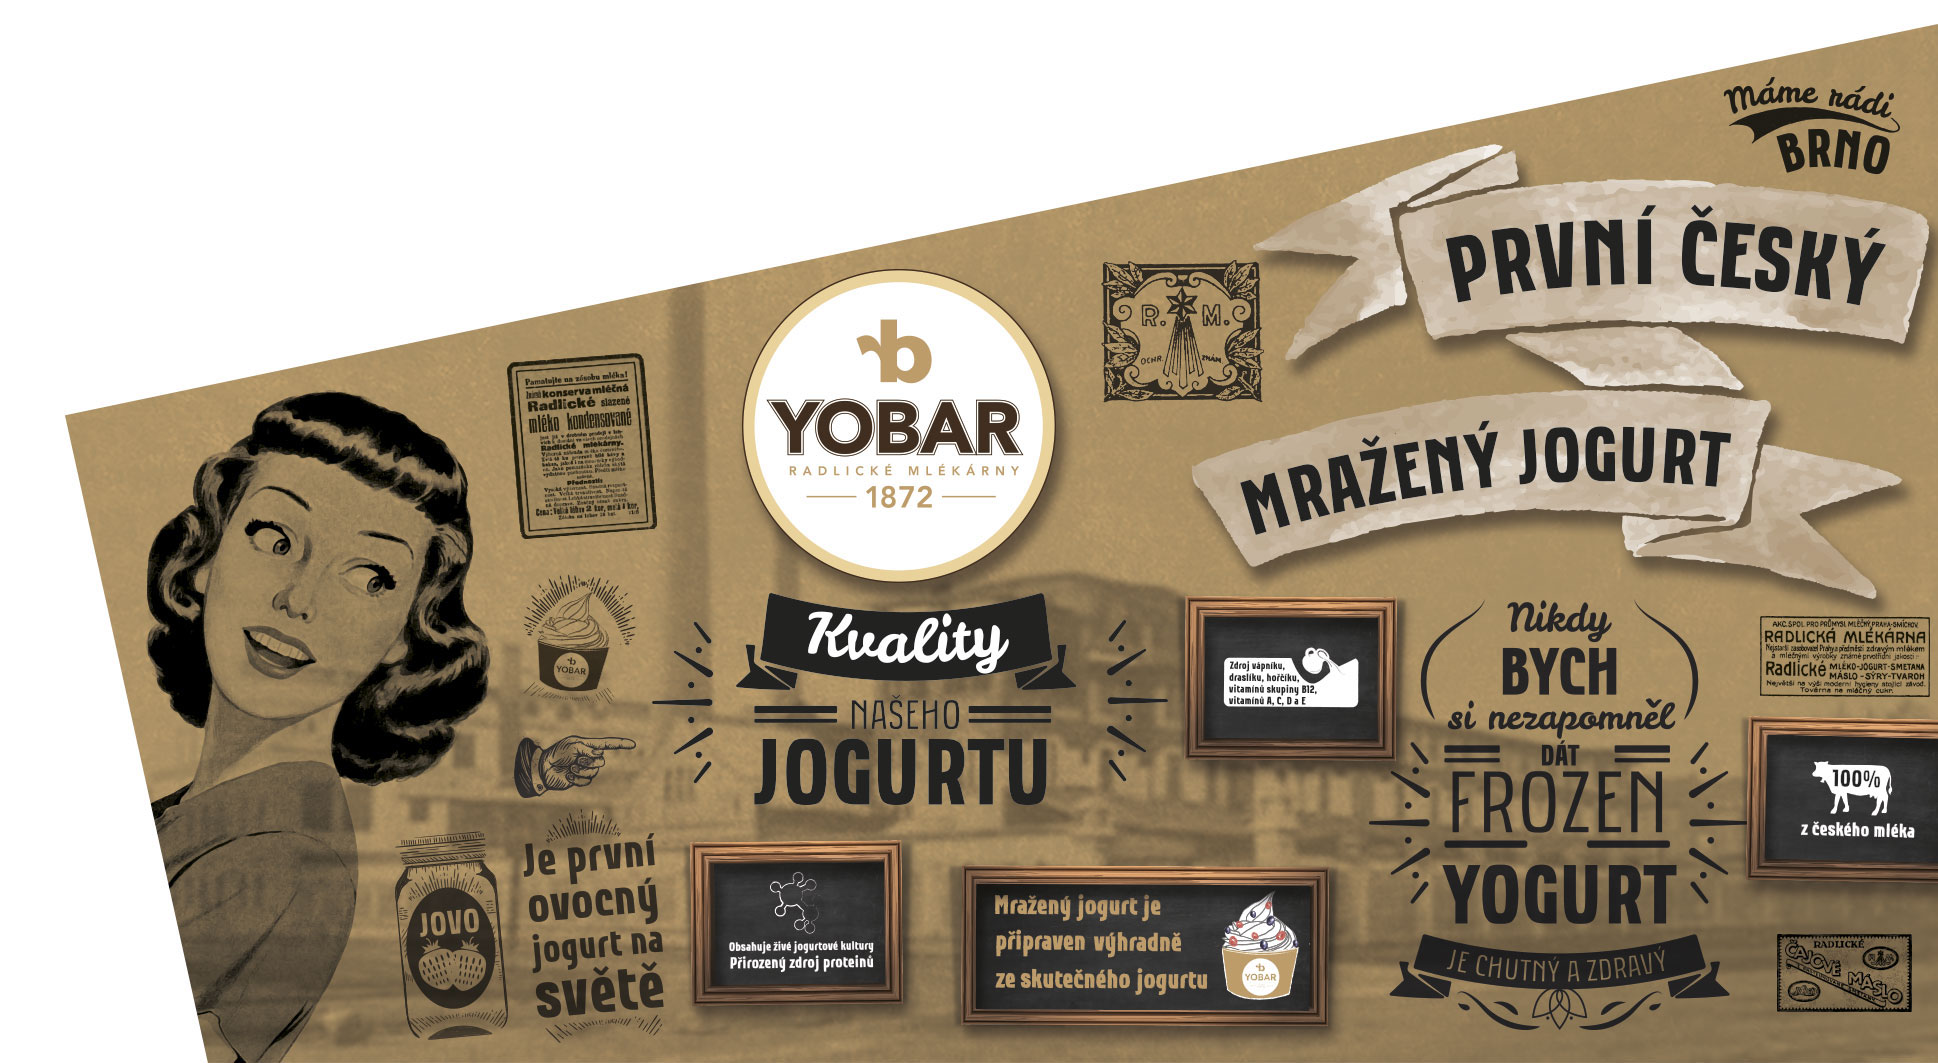 YOBAR New branding concept